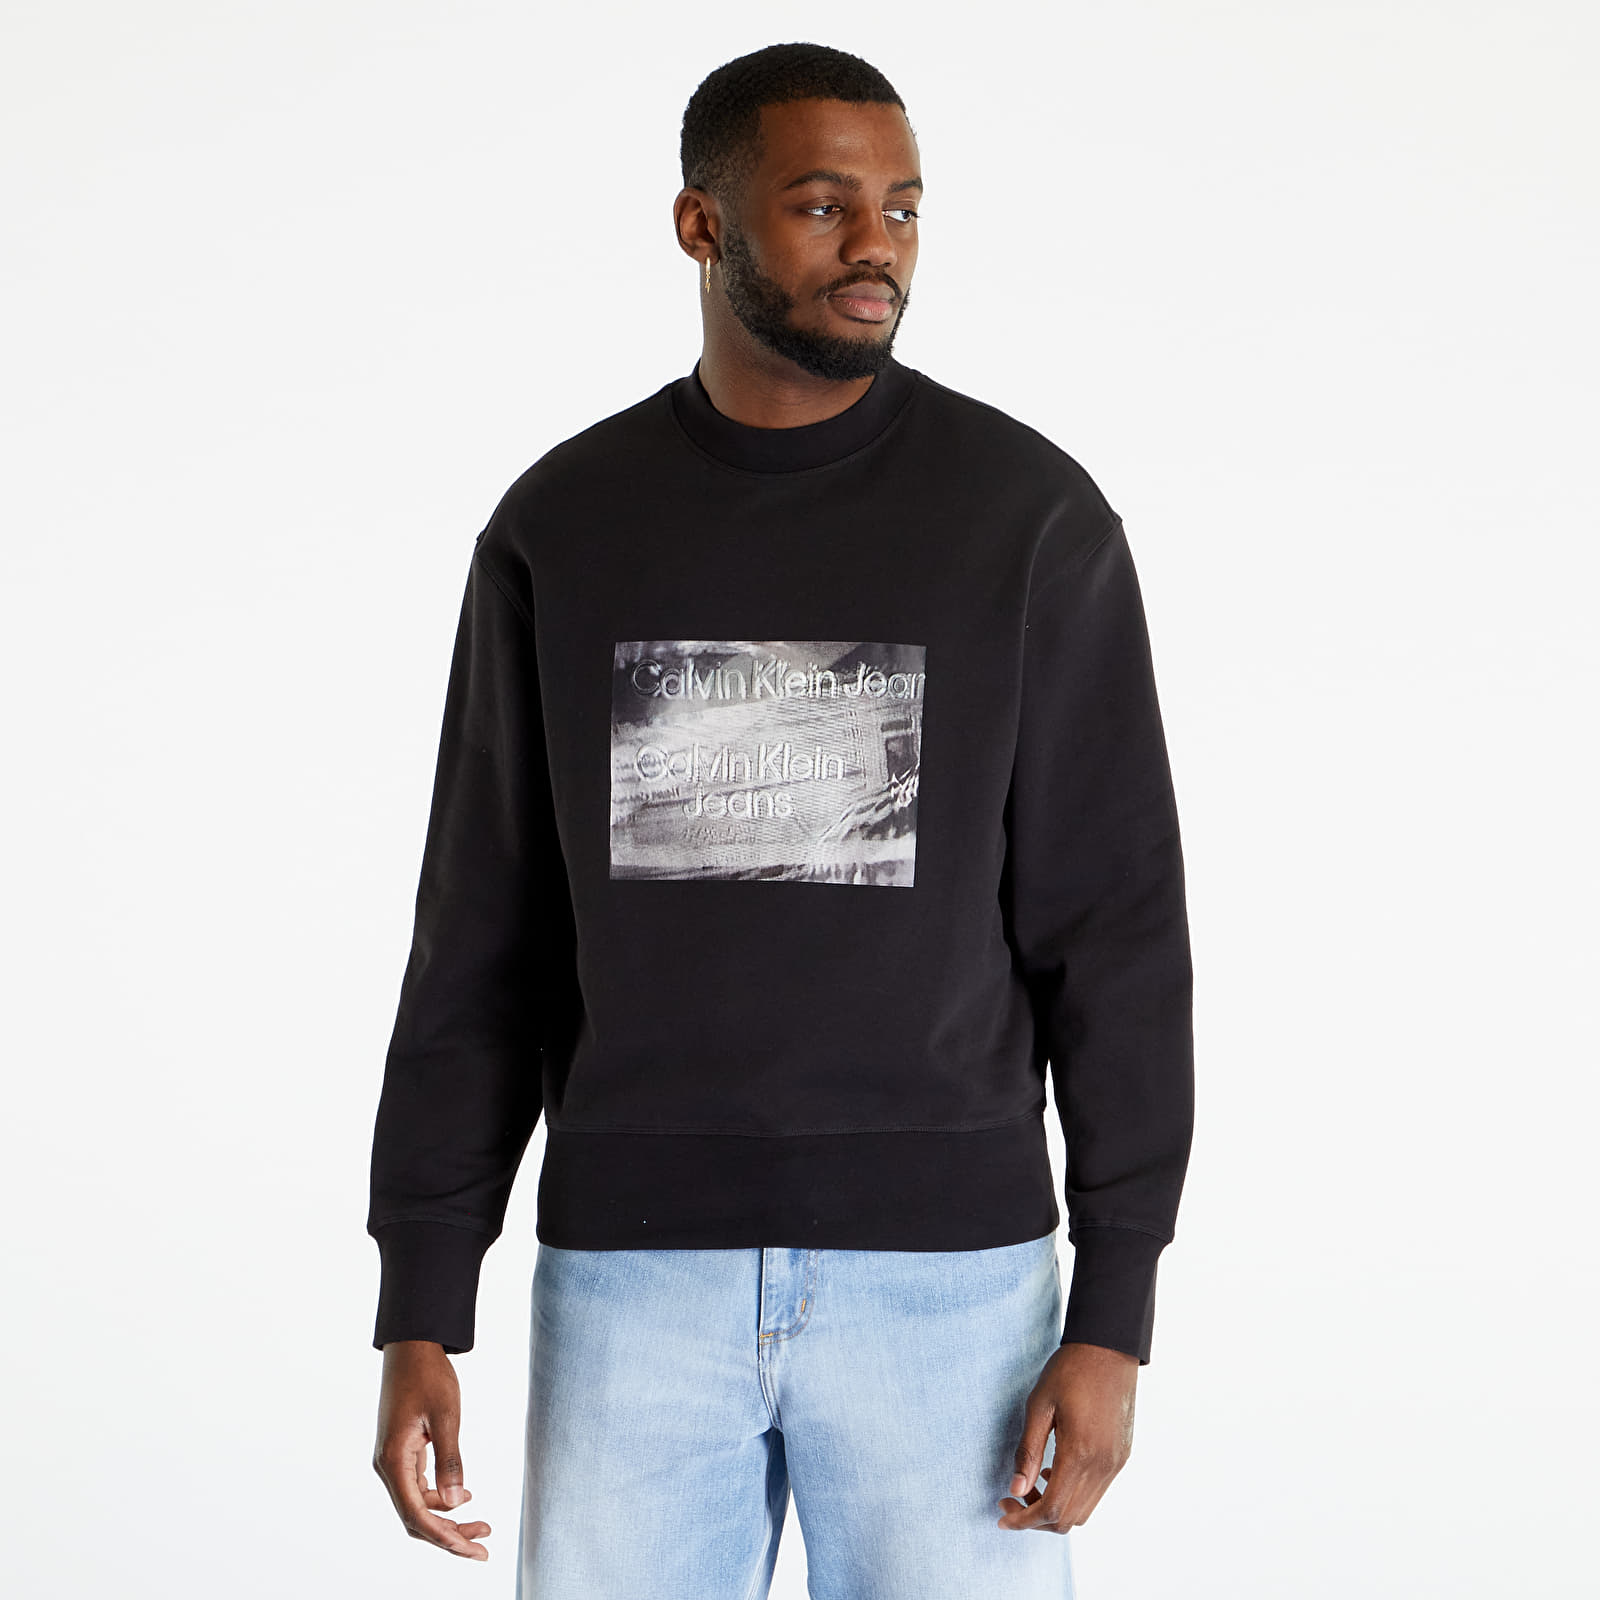 Photopri Calvin Jeans and Footshop sweatshirts | Motion Blur Hoodies Black Sweatshirt Klein